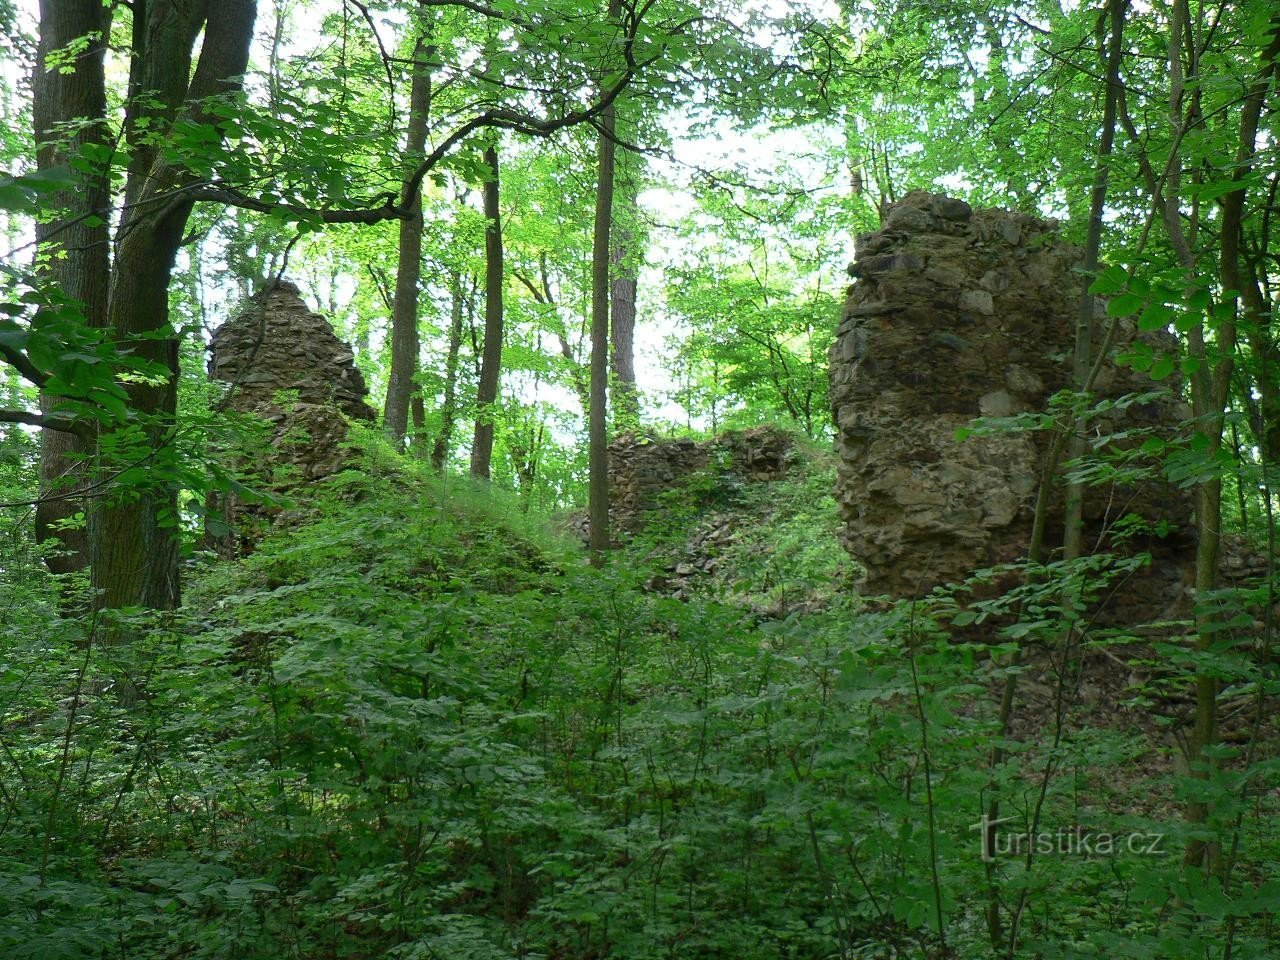 Pušperka várának romjai